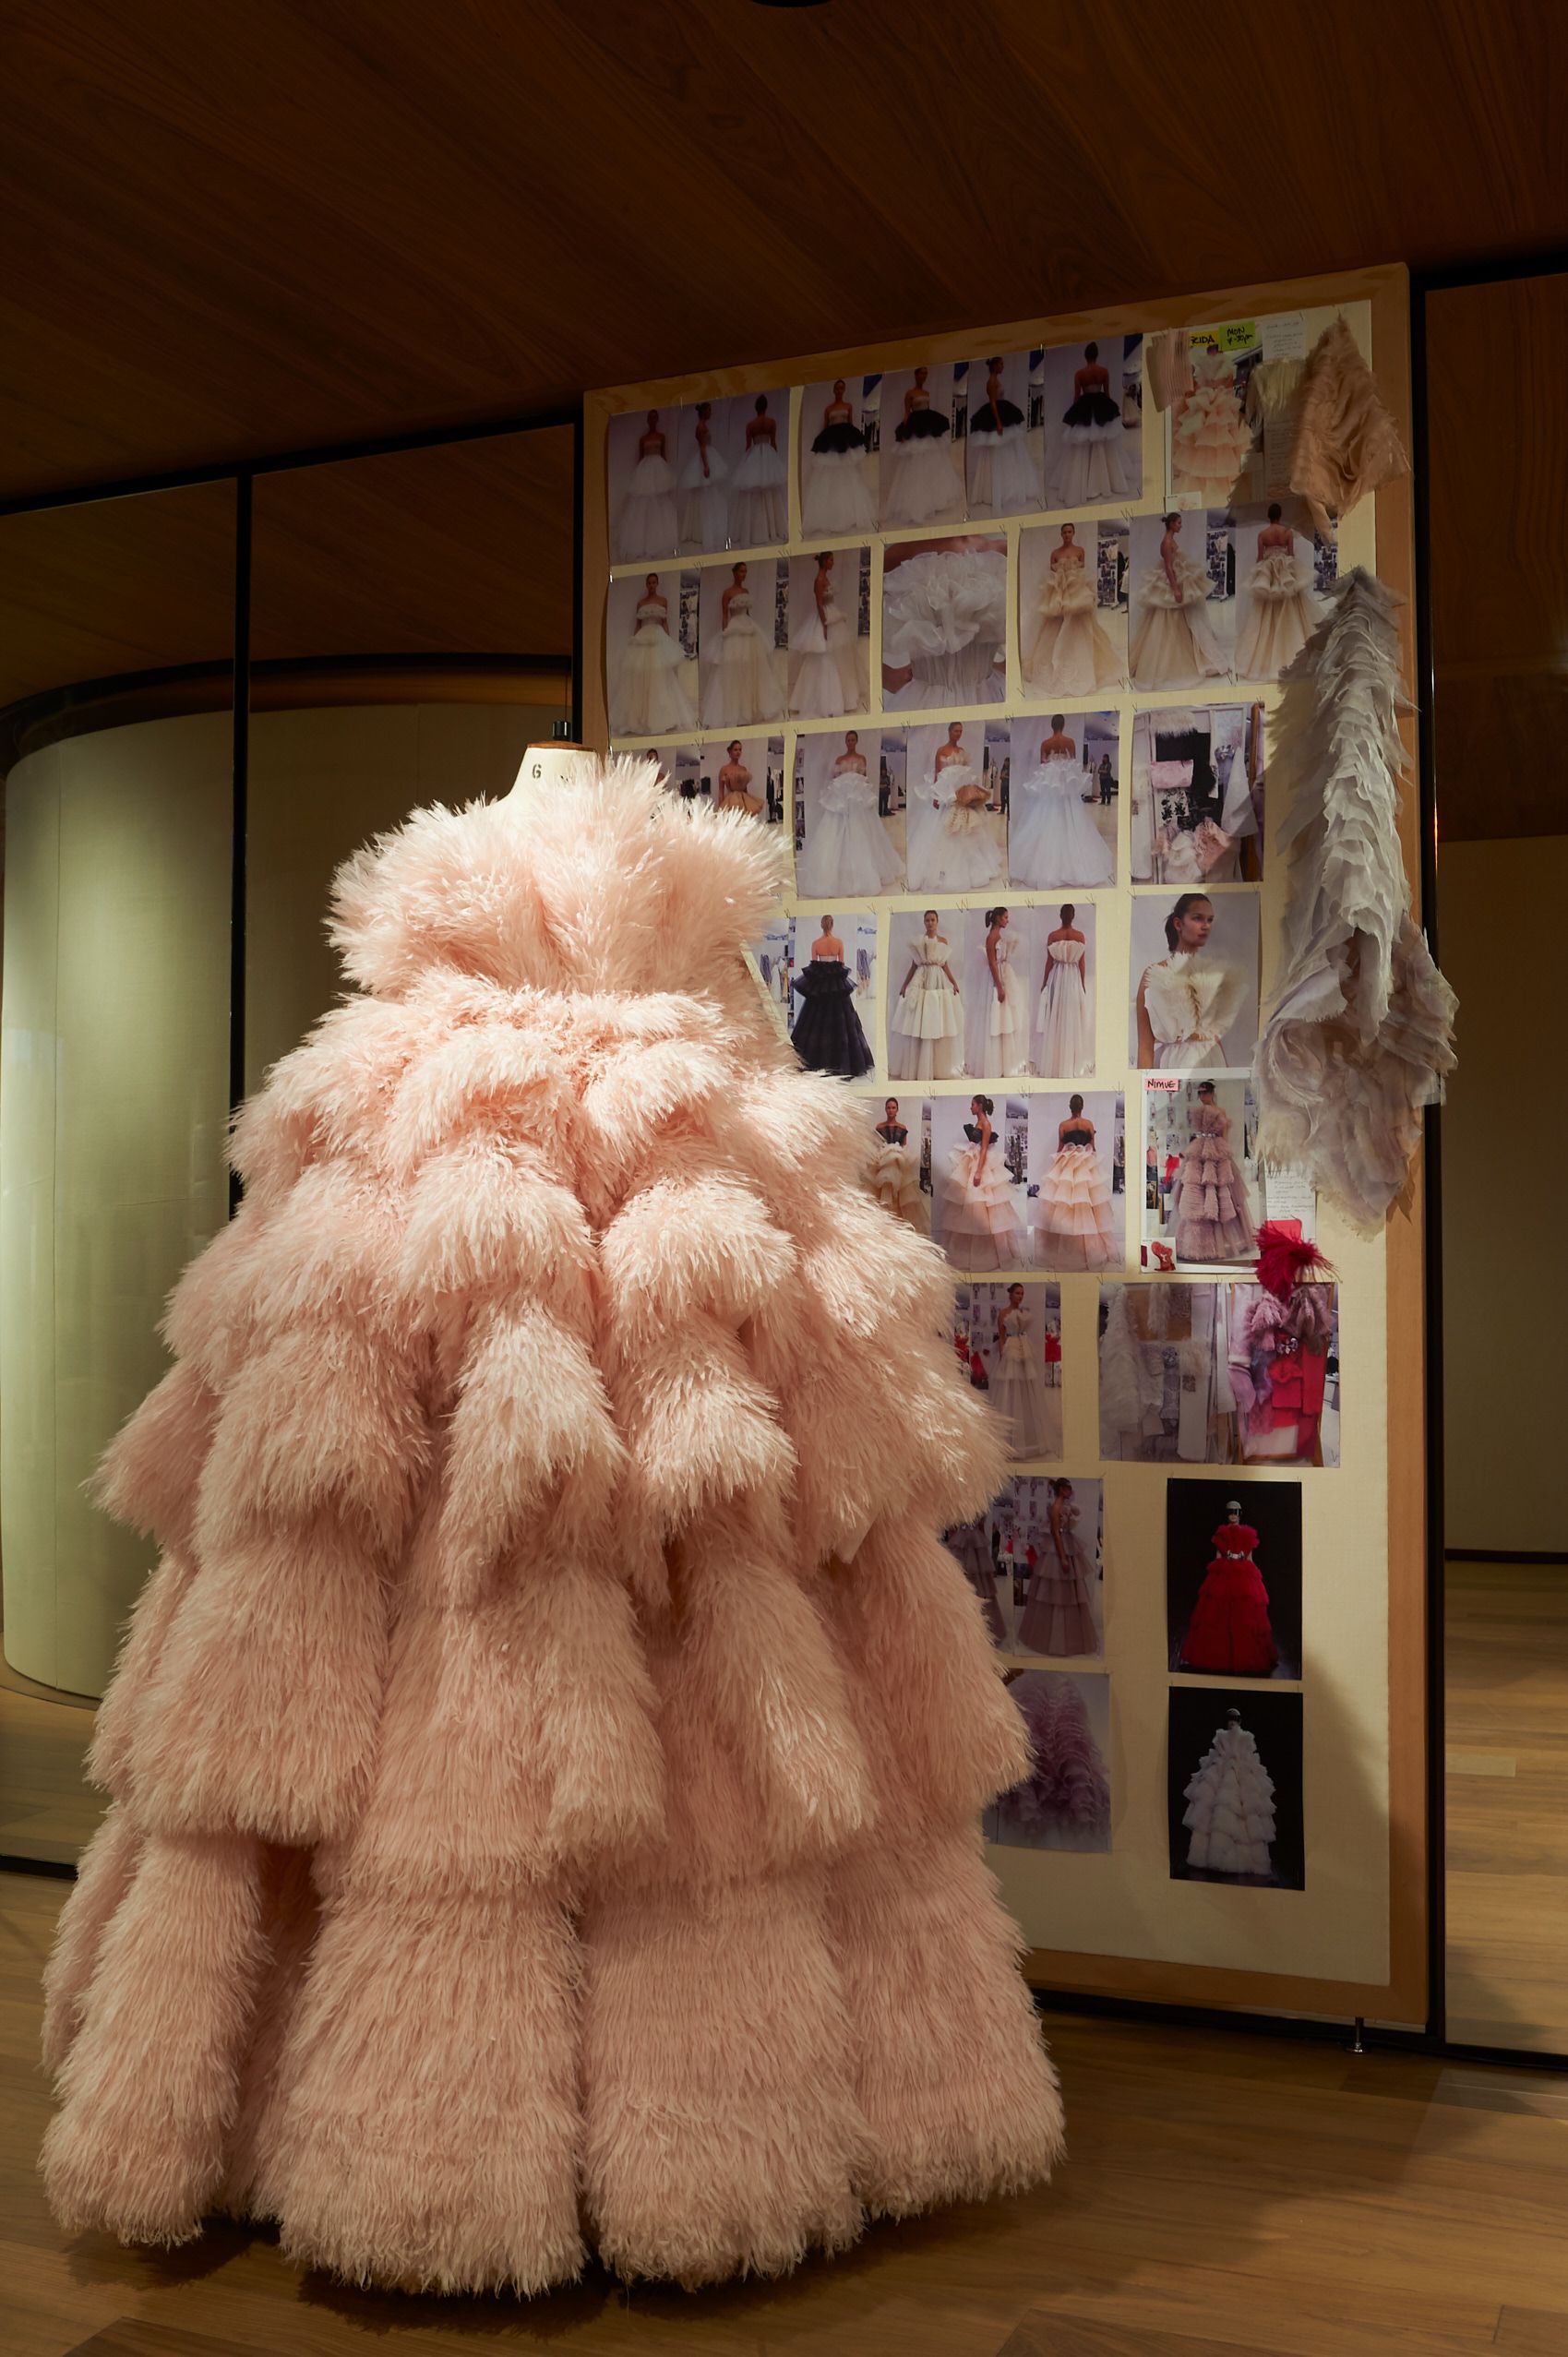 Alexander McQueen: Roses - Exhibiting Fashion